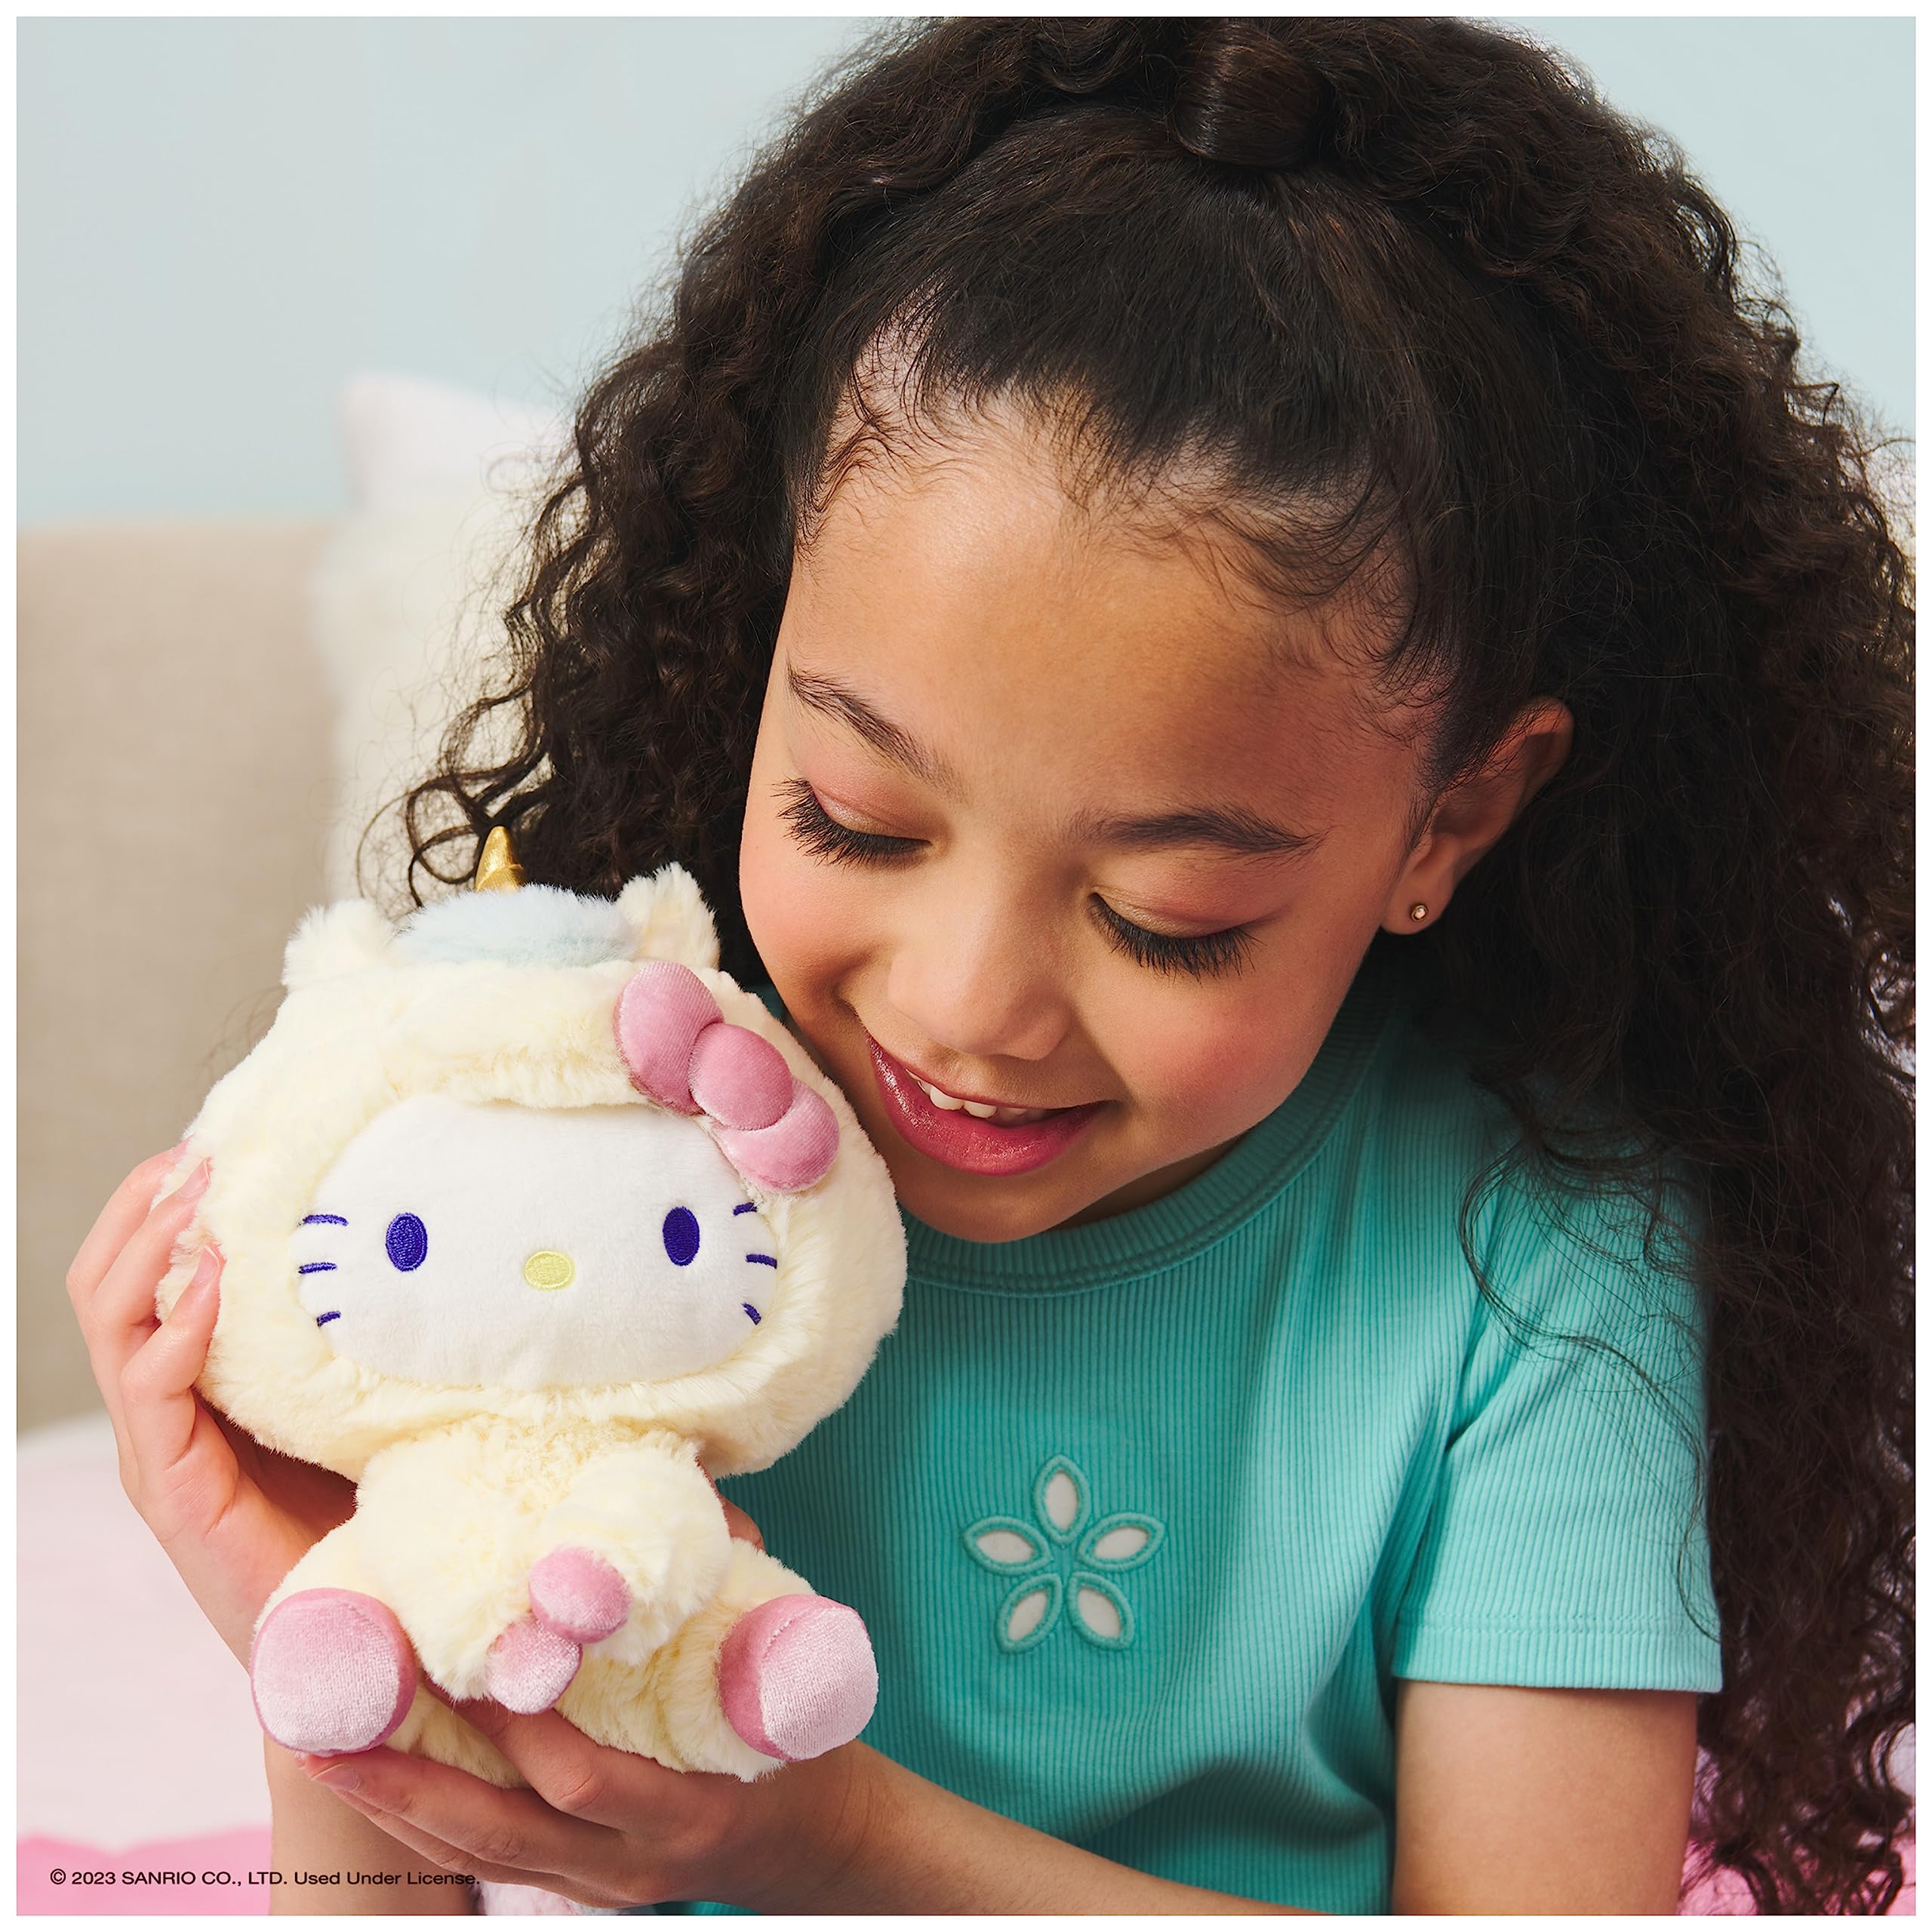 GUND Sanrio Hello Kitty Unicorn Plush Toy, Premium Stuffed Animal for Ages 1 and Up, Yellow, 6”